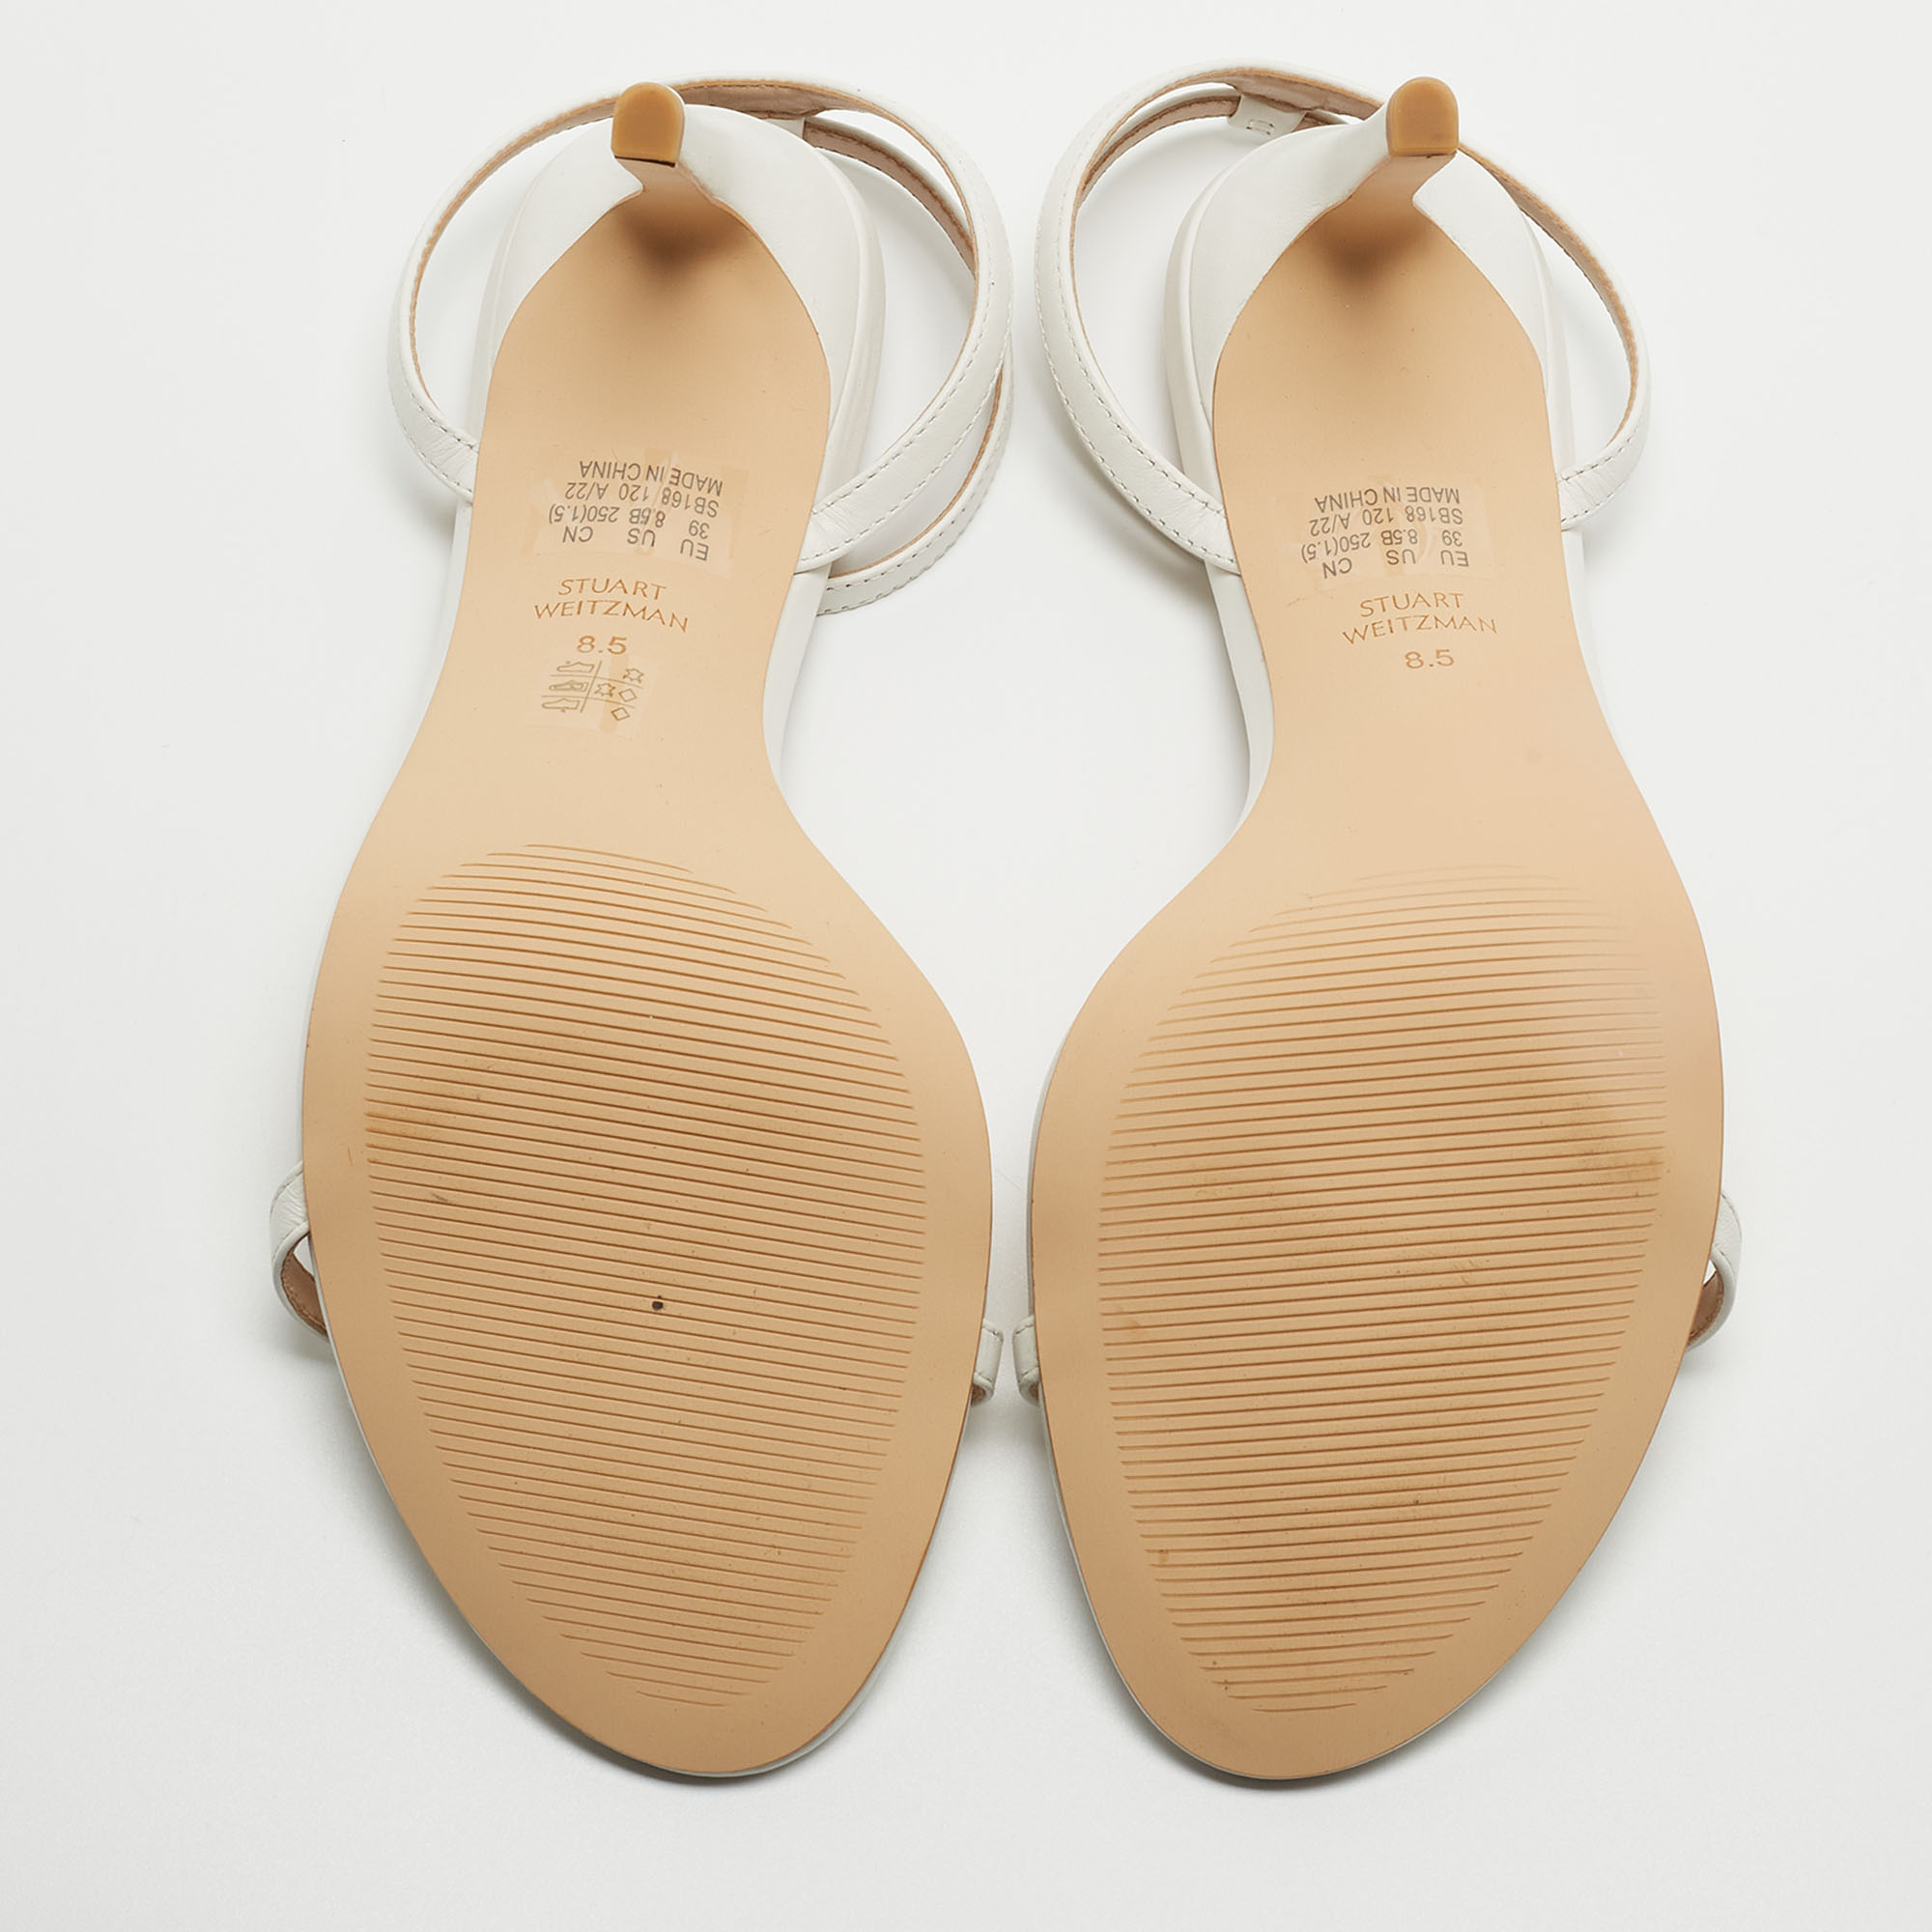 Stuart Weitzman White Leather Nudist Ankle Strap Sandals Size 39